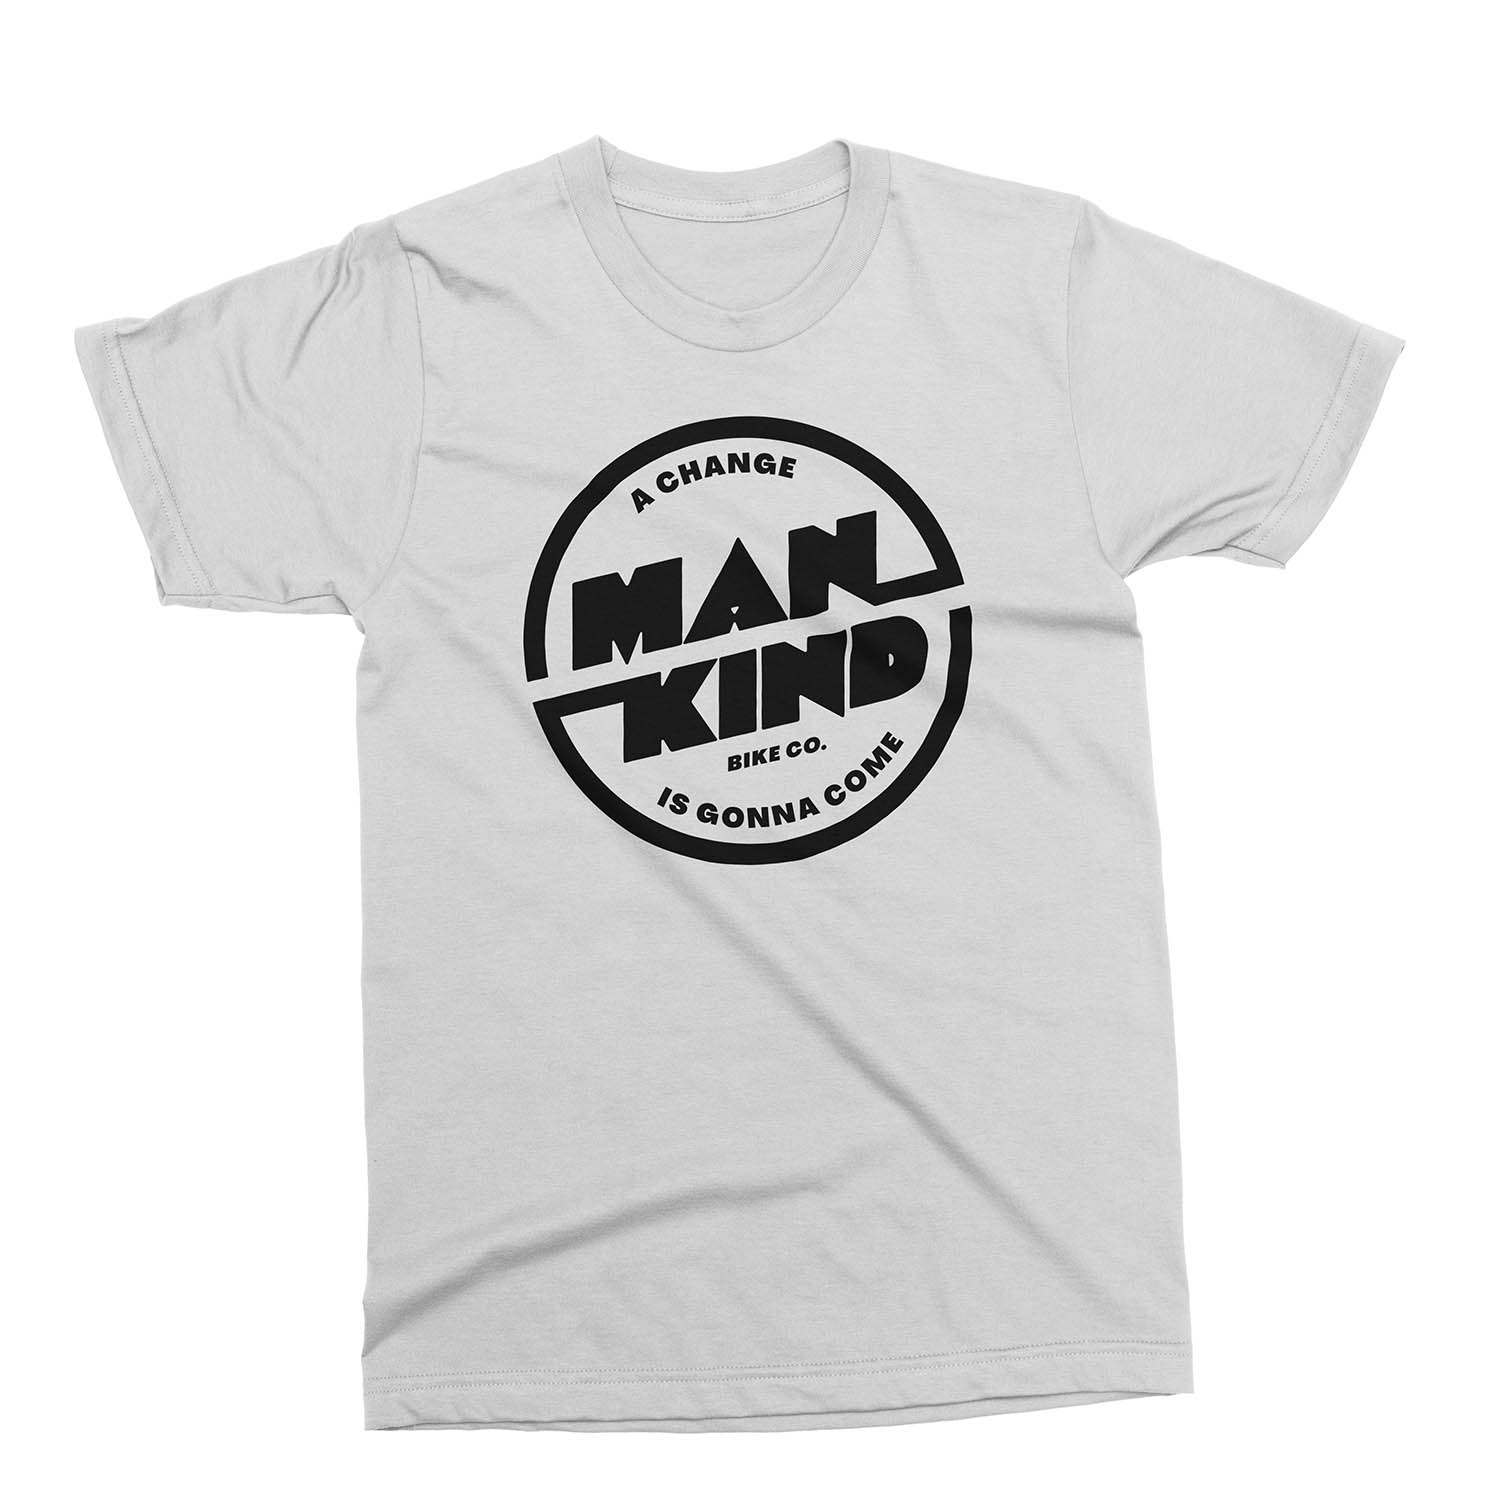 Mankind Change T-Shirt white